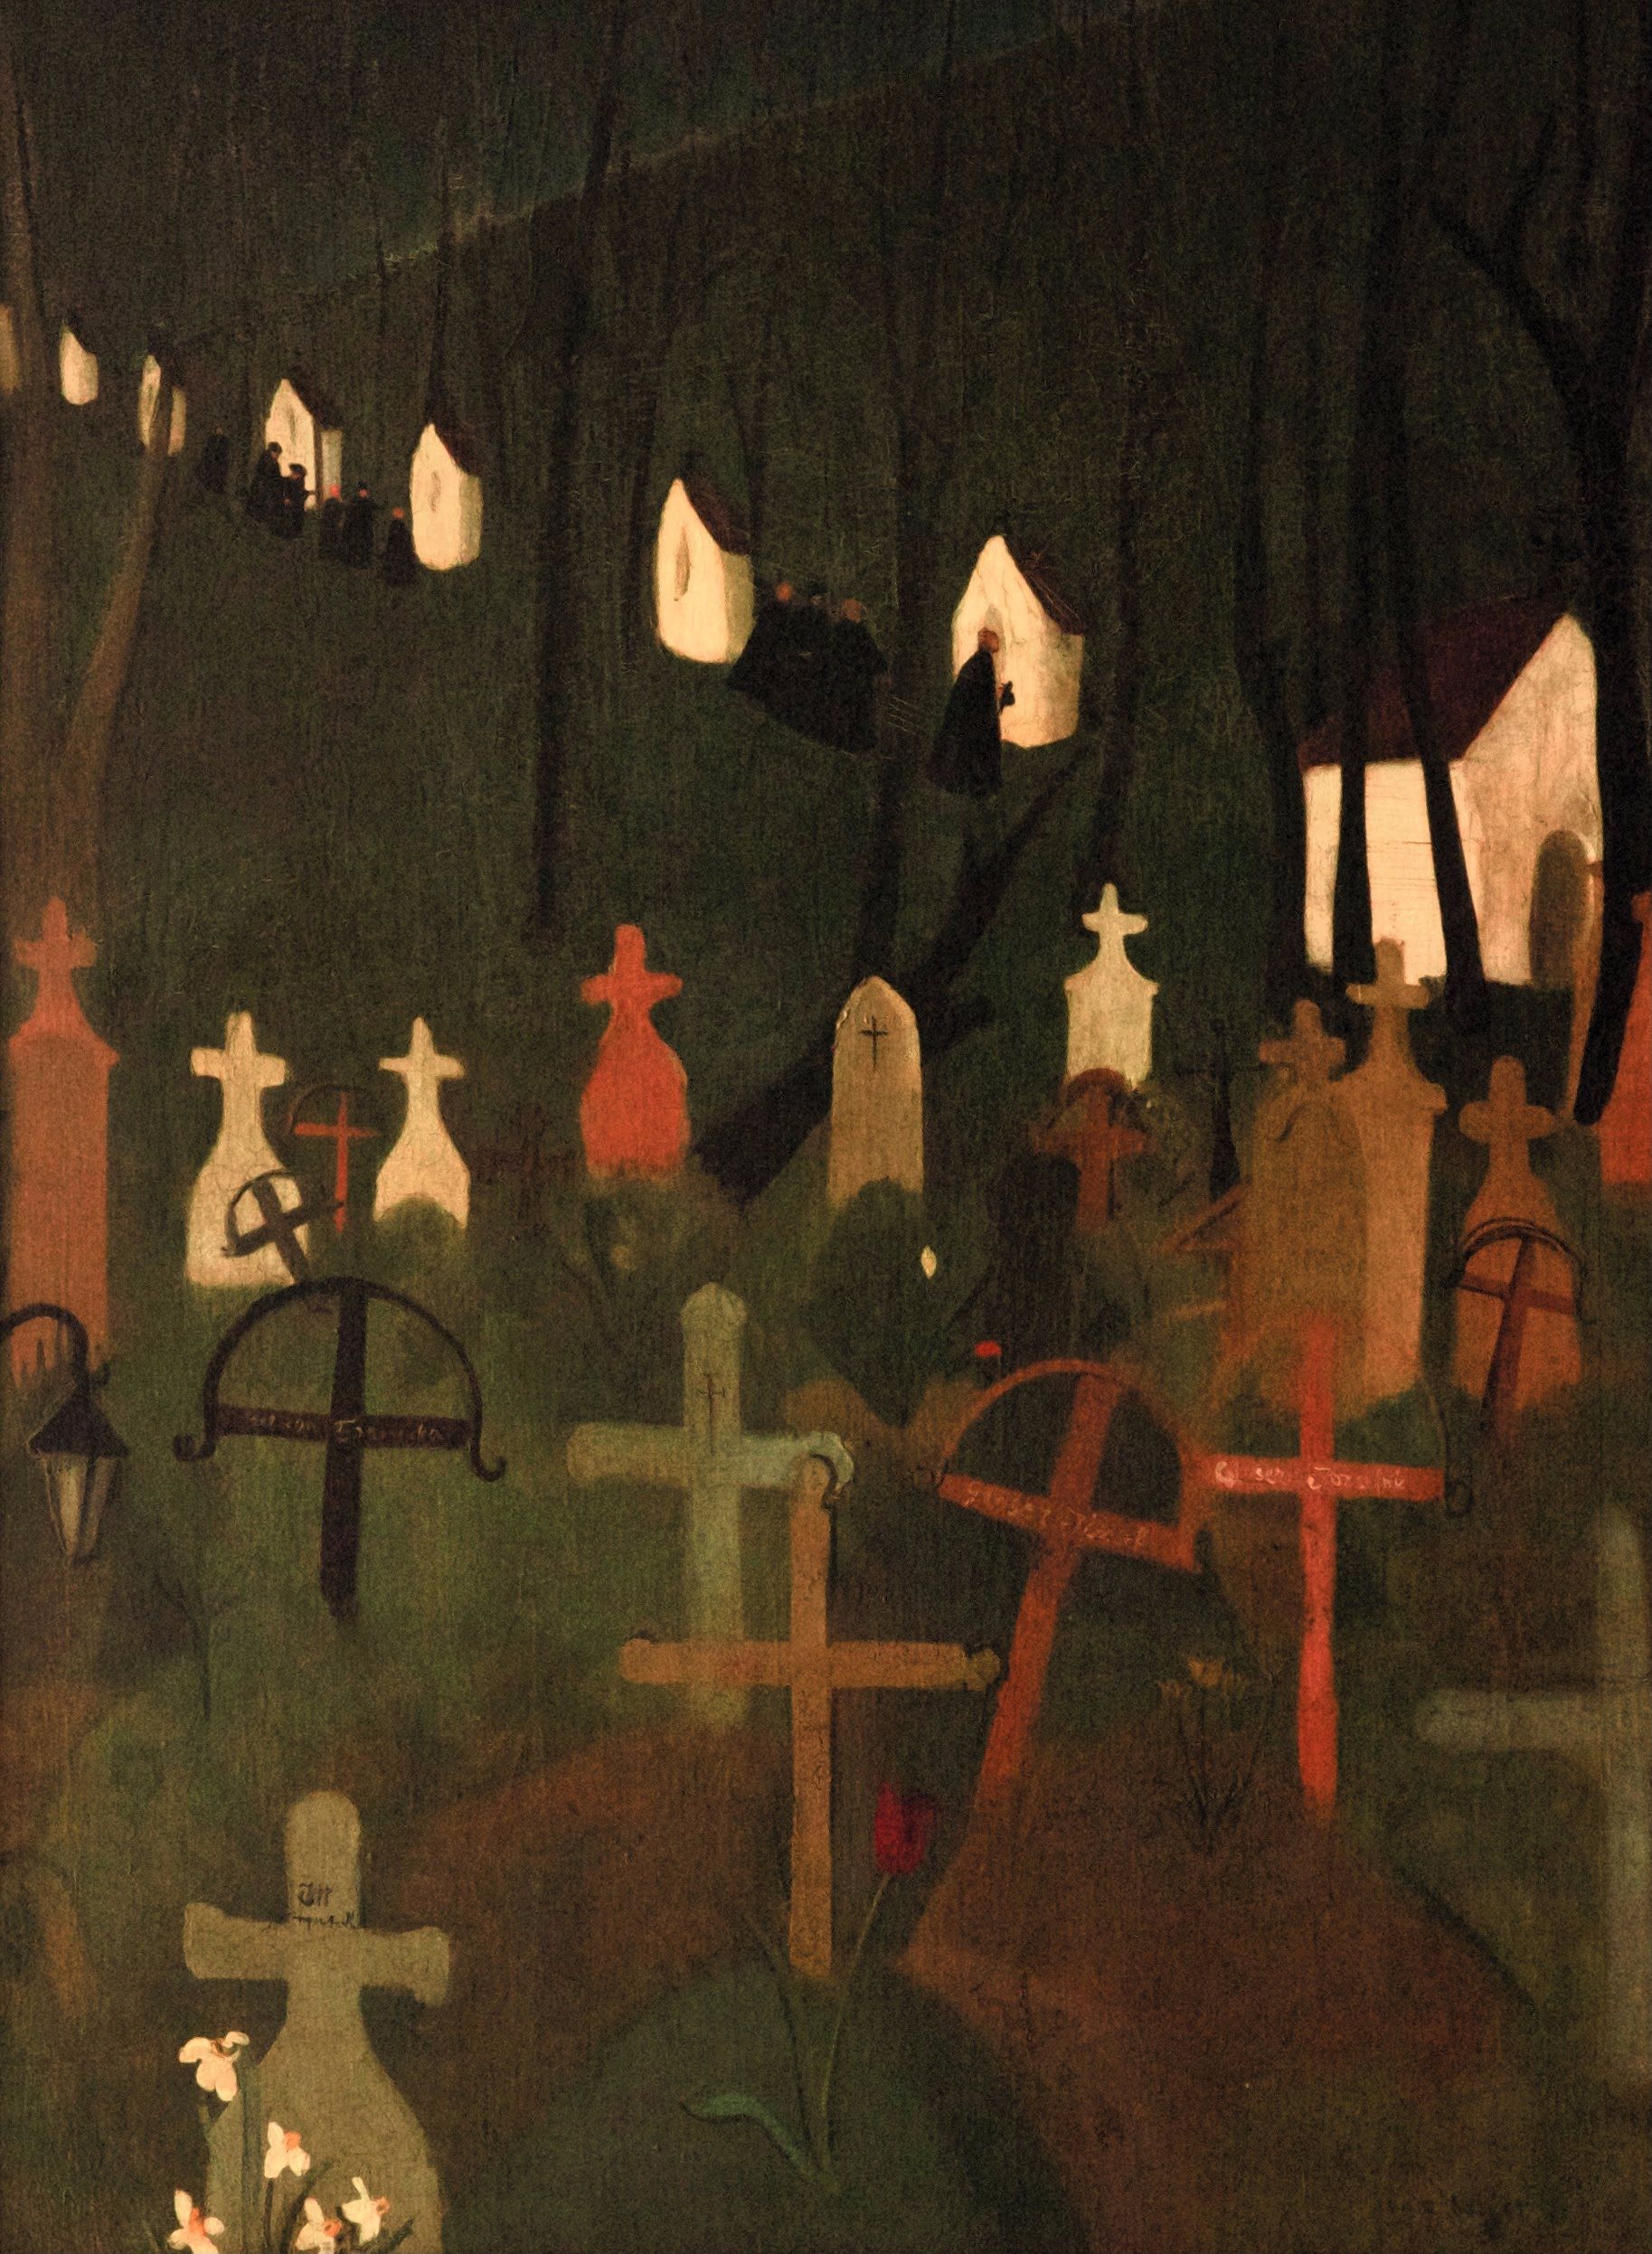 Cimitirul vesel by Amrita Sher-Gil - 1939 - 75 x 100.5 cm 